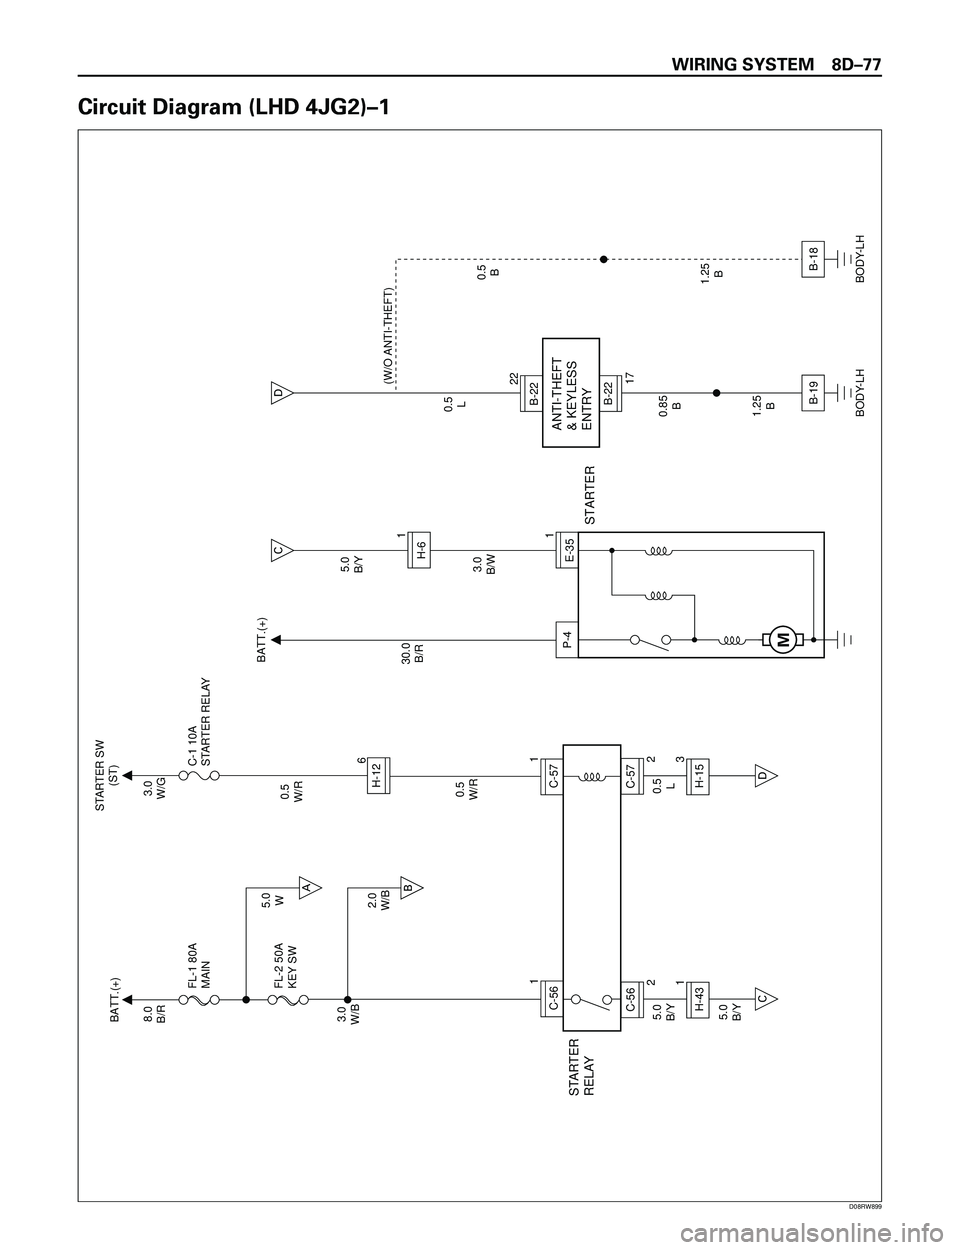 ISUZU TROOPER 1998  Service Repair Manual WIRING SYSTEM 8DÐ77
Circuit Diagram (LHD 4JG2)Ð1
C
D
D
STARTERANTI-THEFT
& KEYLESS
ENTRY
3.0
B/W
5.0
B/Y5.0
B/Y0.5
L5.0
B/Y
0.5
L
0.5
B (W/O ANTI-THEFT)
1.25
B 0.85
B
1.25
B 30.0
B/R
1 BATT.(+) BATT